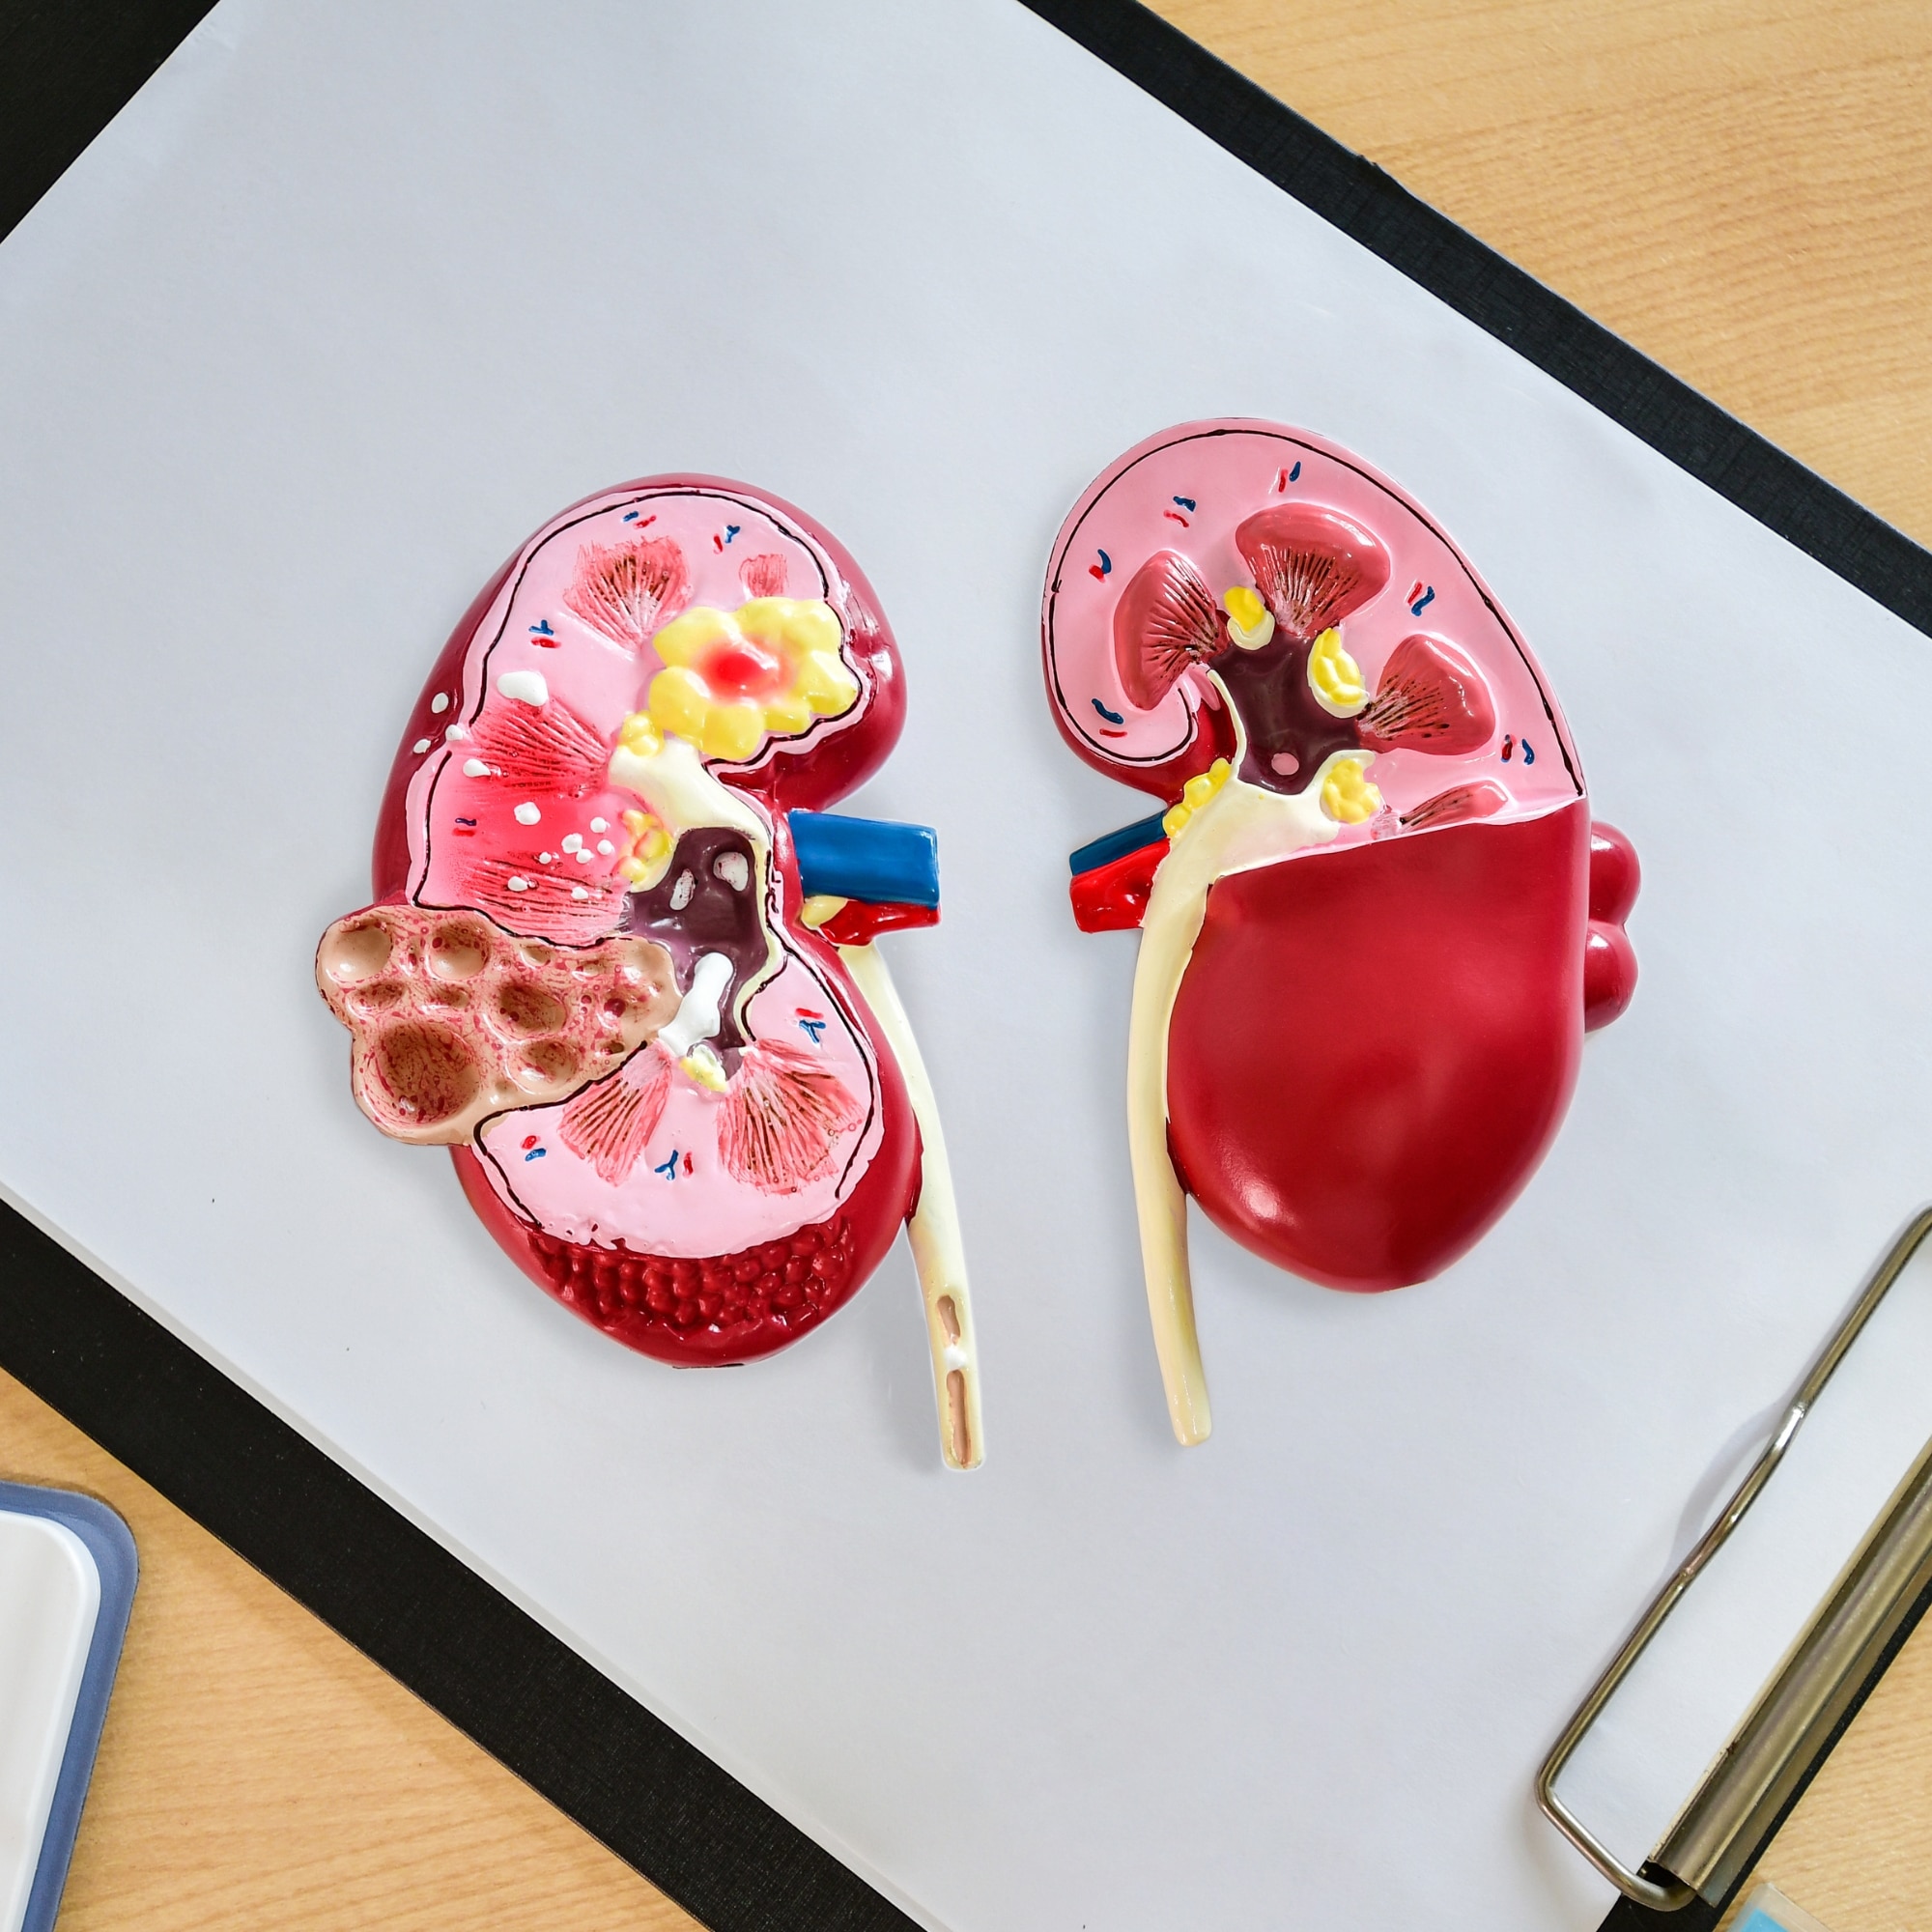 a model of a human kidney on a desk